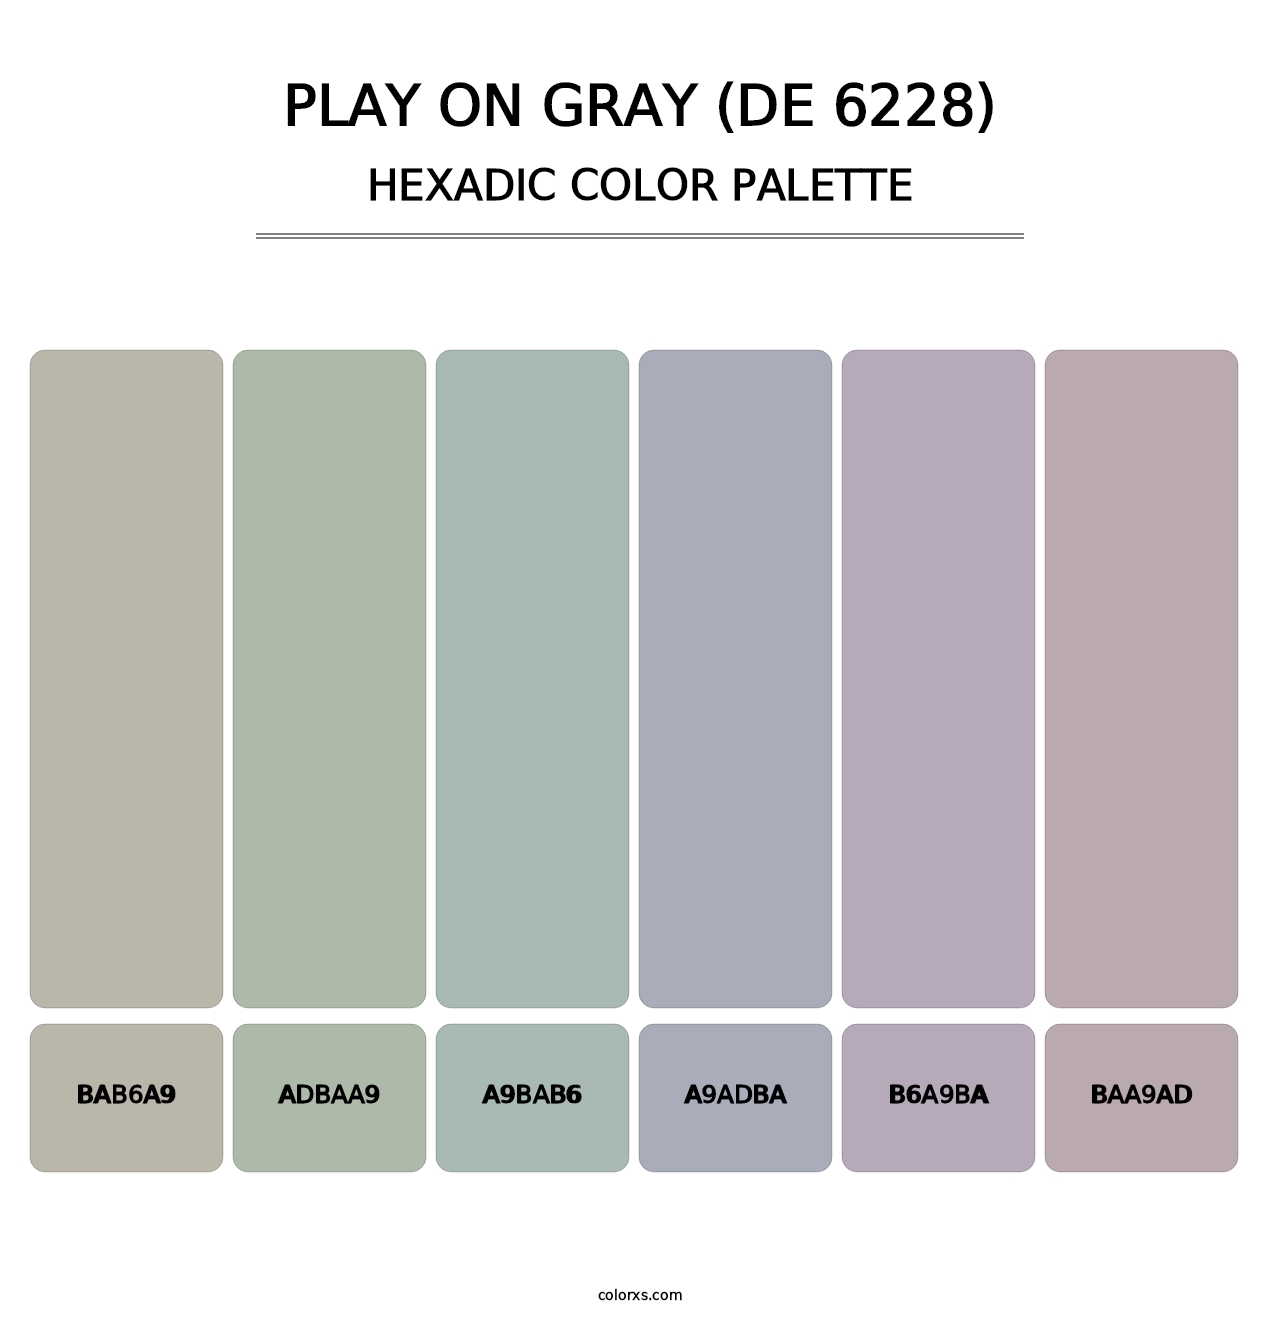 Play on Gray (DE 6228) - Hexadic Color Palette